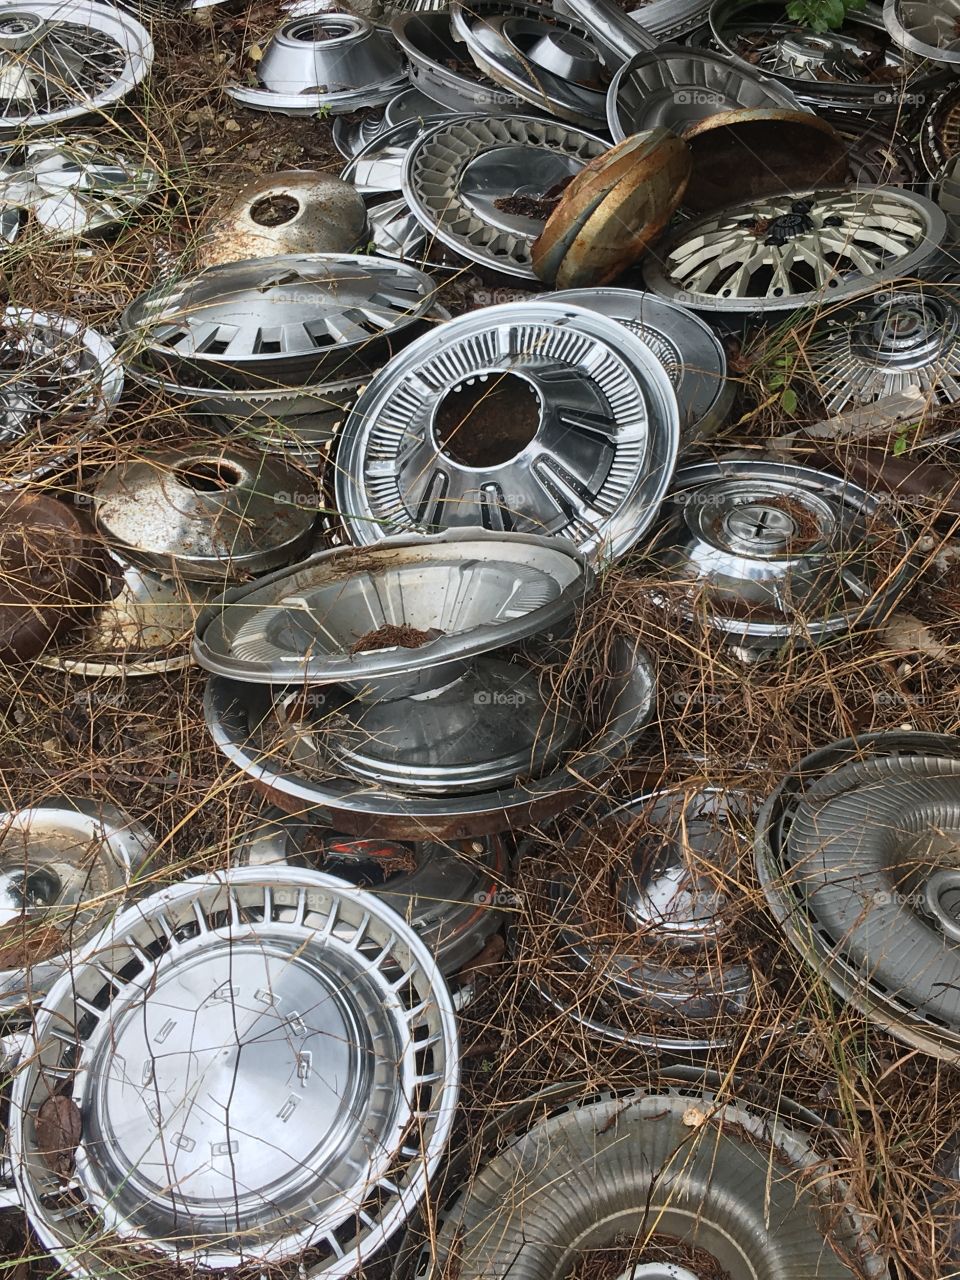 Vintage hubcaps at the junkyard